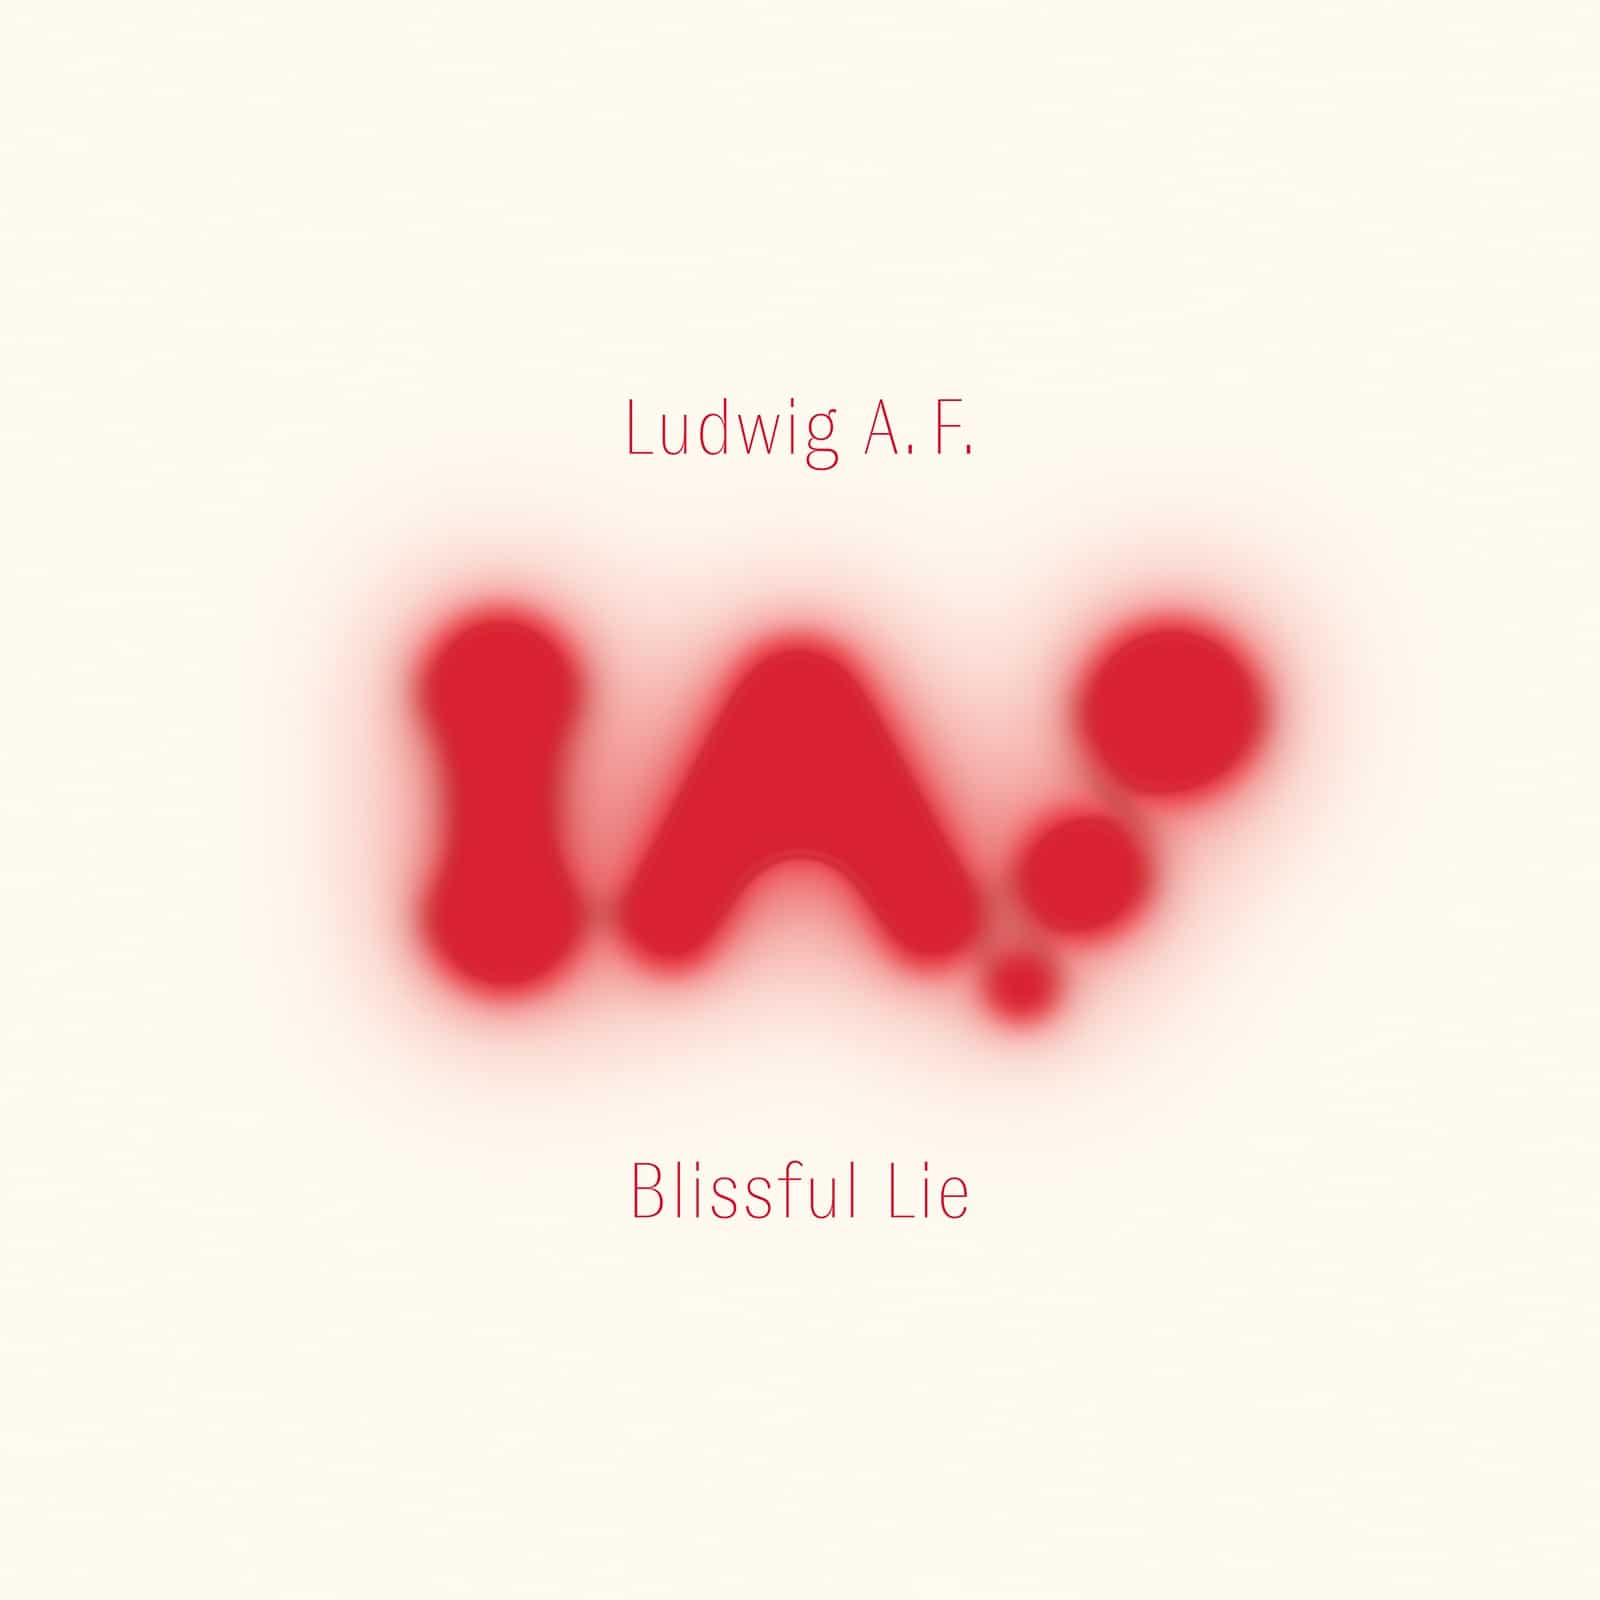 Ludwig A.F. - Blissful Lie - XIN004 - Exo Recordings International